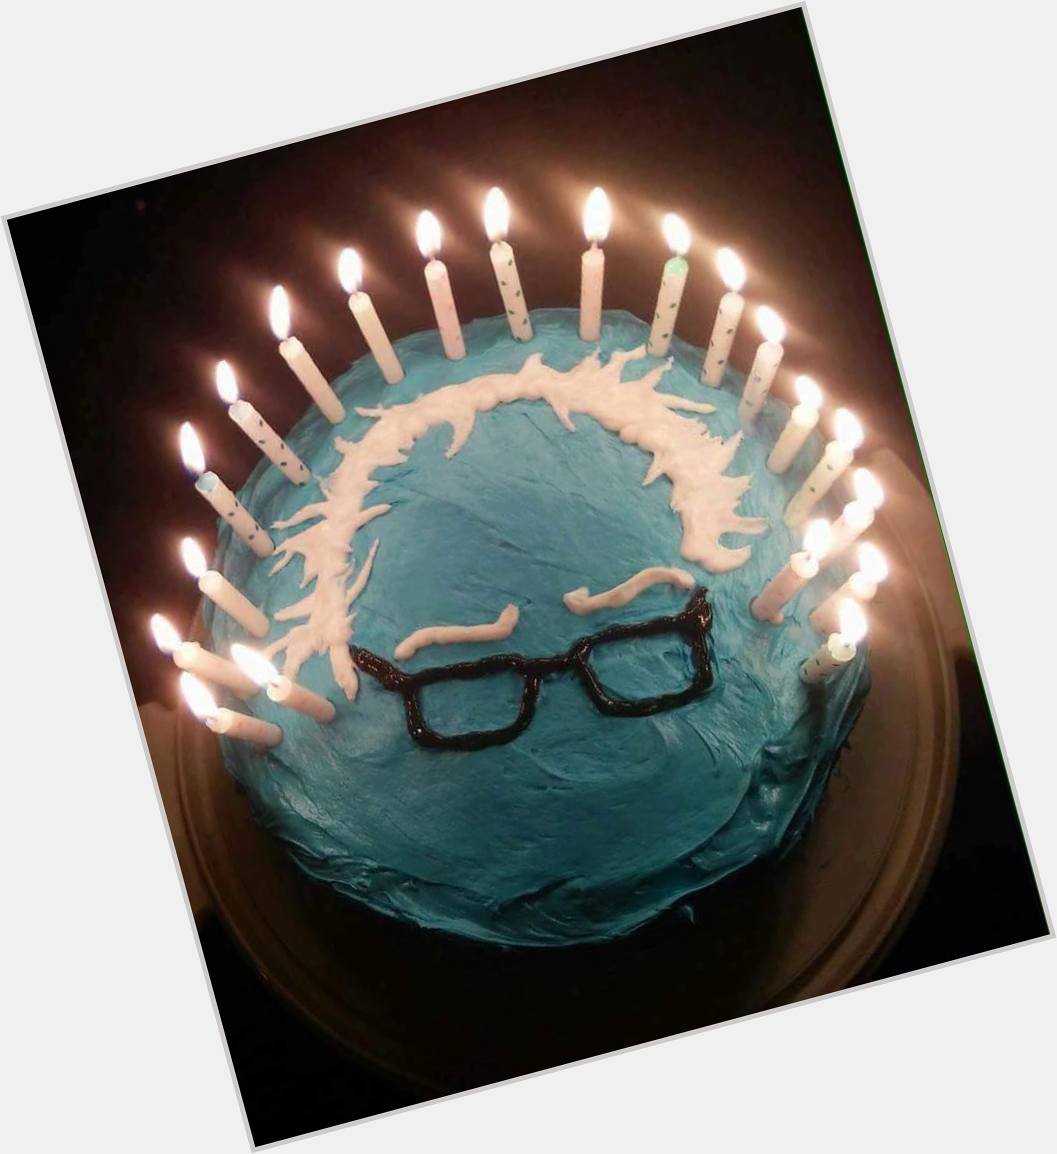 Happy Birthday Bernie Sanders, I heard you turned 80 so god bless and I hope you live until 100. 